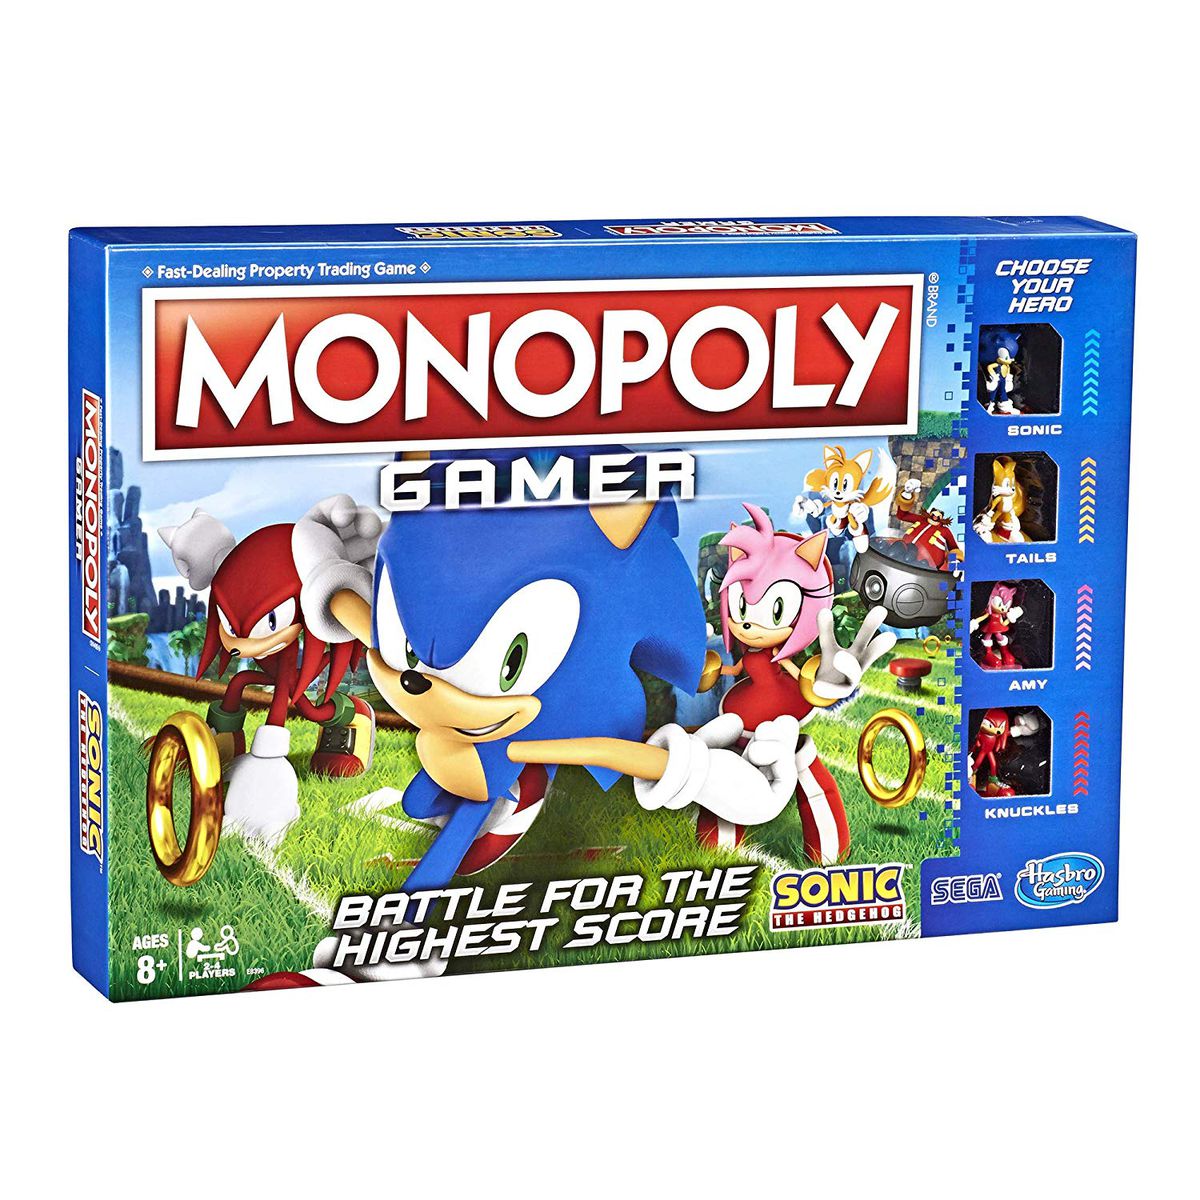 Box art for Monopoly Gamer: Sonic the Hedgehog